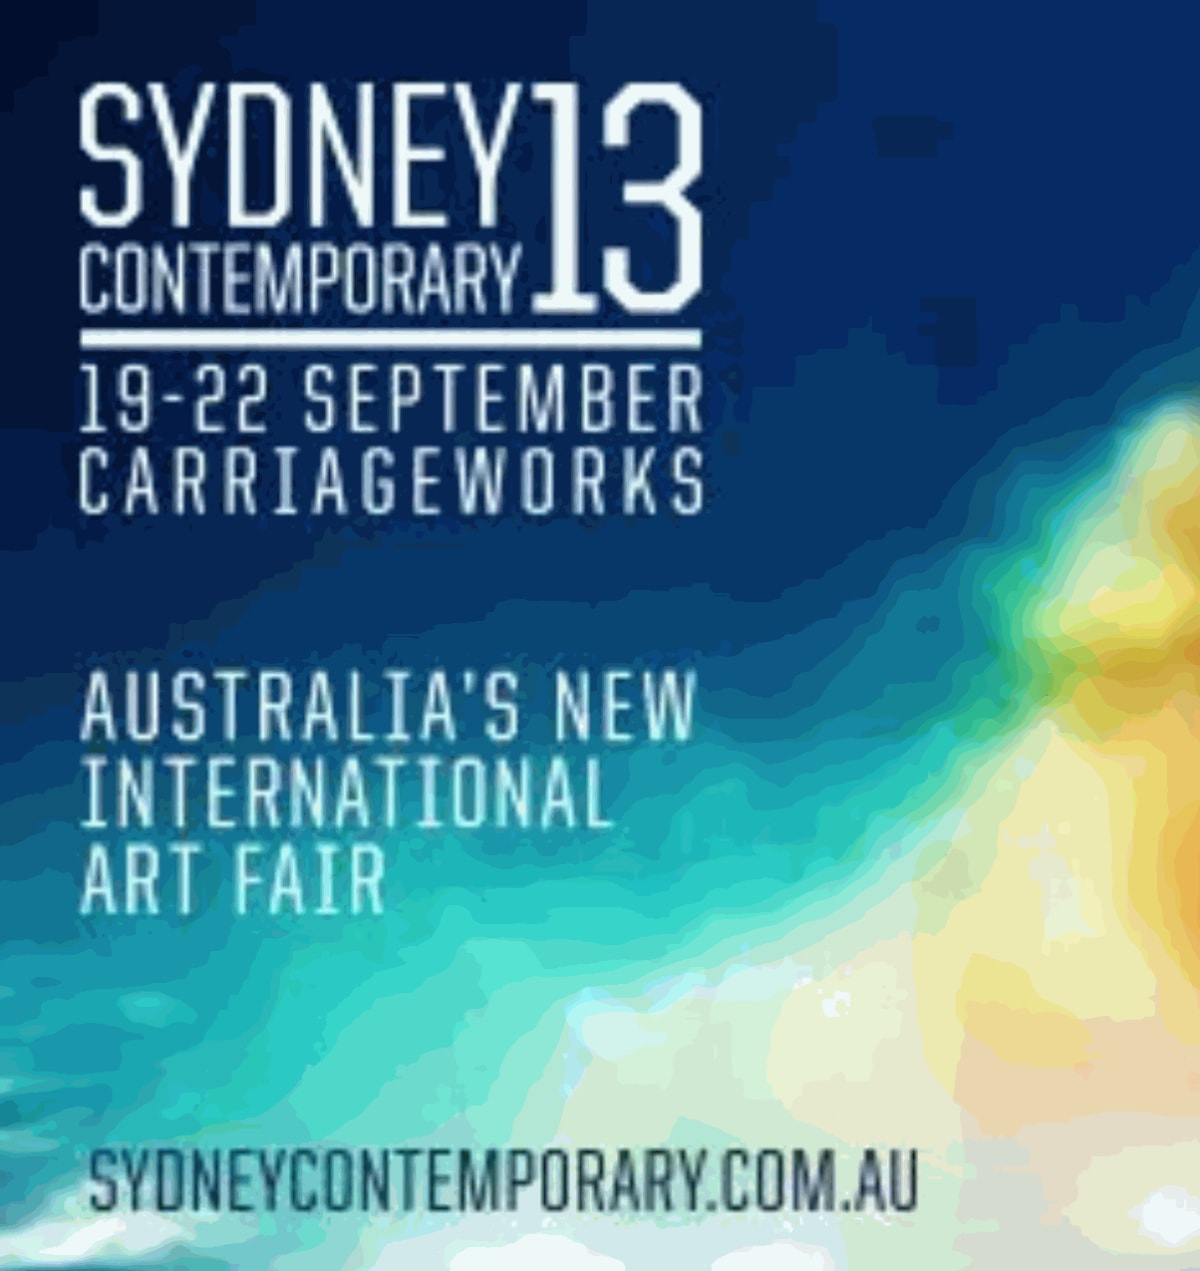 Sydney Contemporary 13